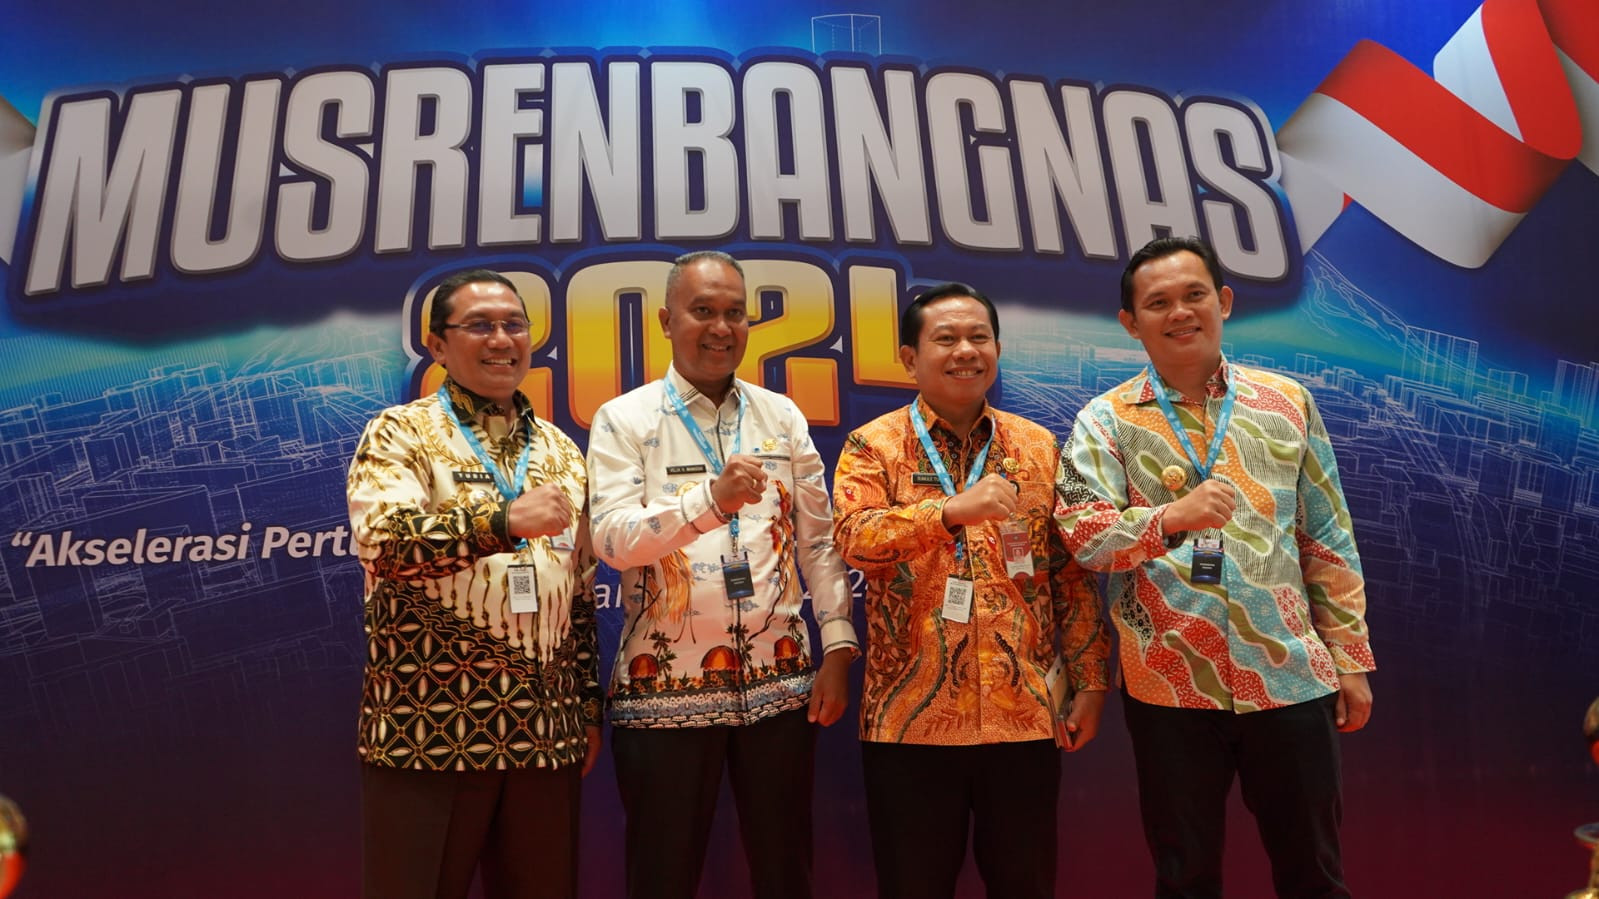 Pj Bupati Yudia Ramli Optimistis Musrenbangnas Tonggak Terwujudnya Indonesia Emas 2045 - JPNN.com